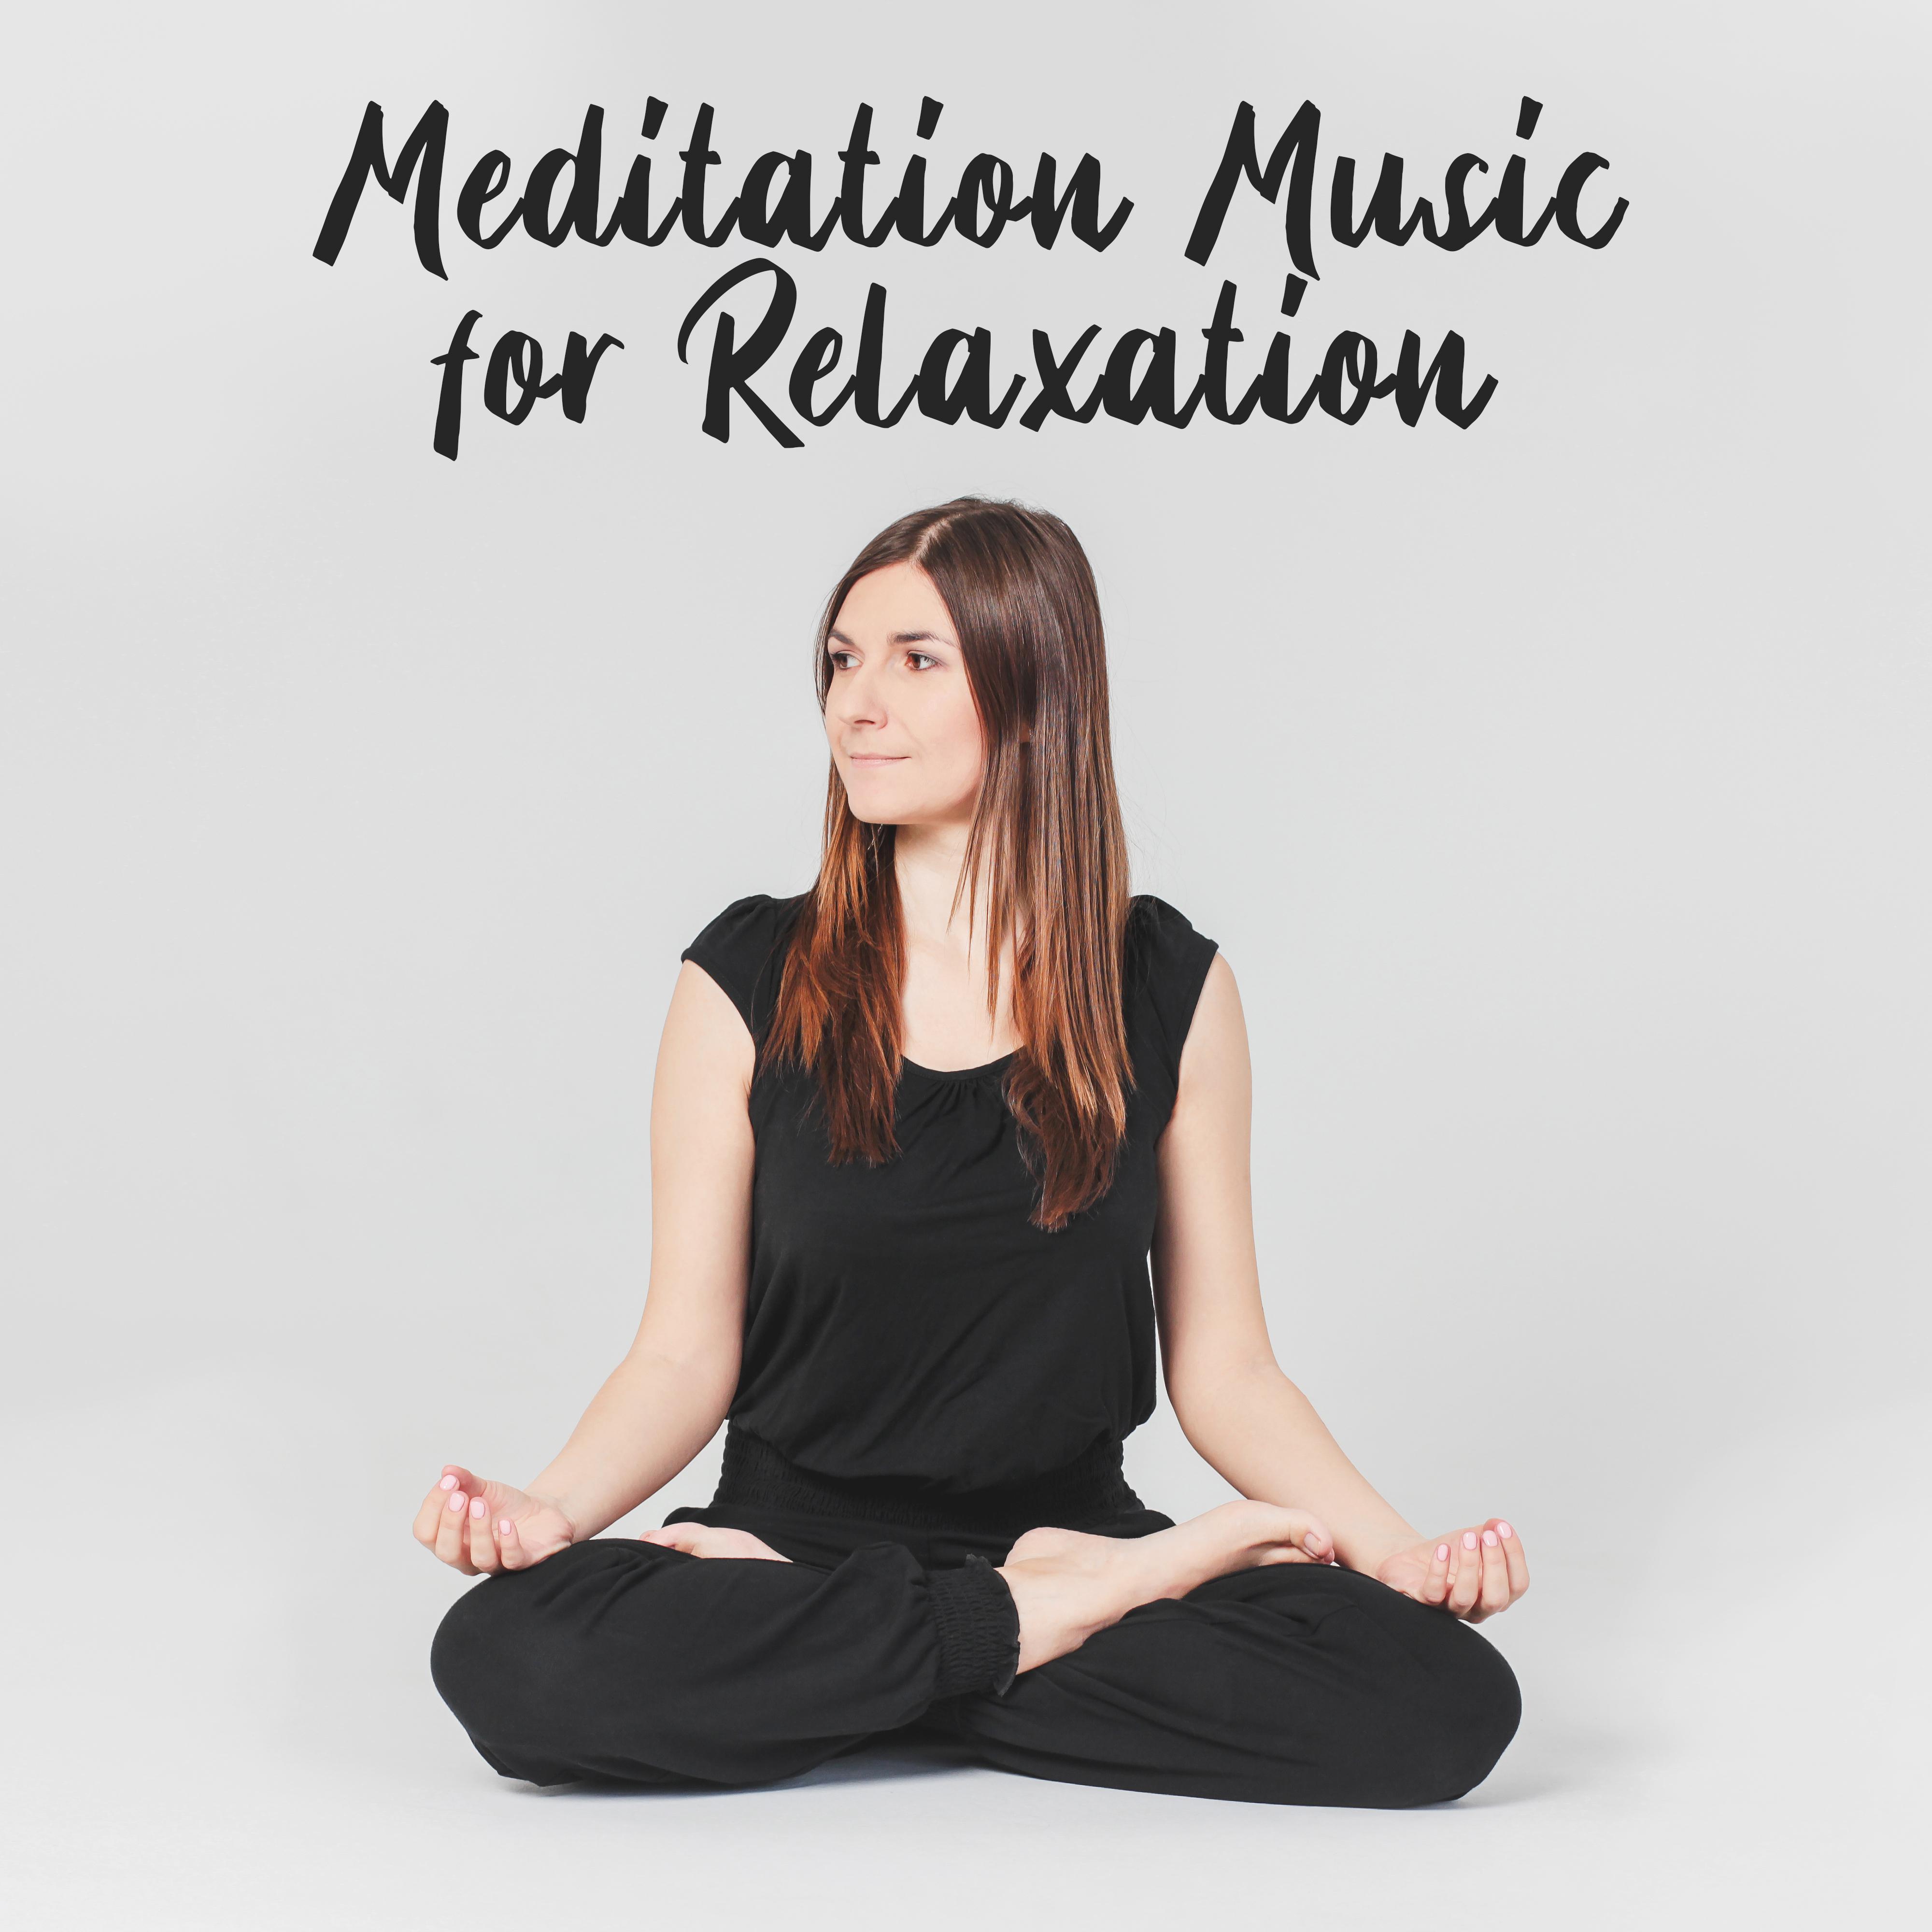 Meditation Music for Relaxation  Blissful Yoga, Healing Music to Calm Down, Mindful Meditation, Yoga Zen, Meditation Hits 2019